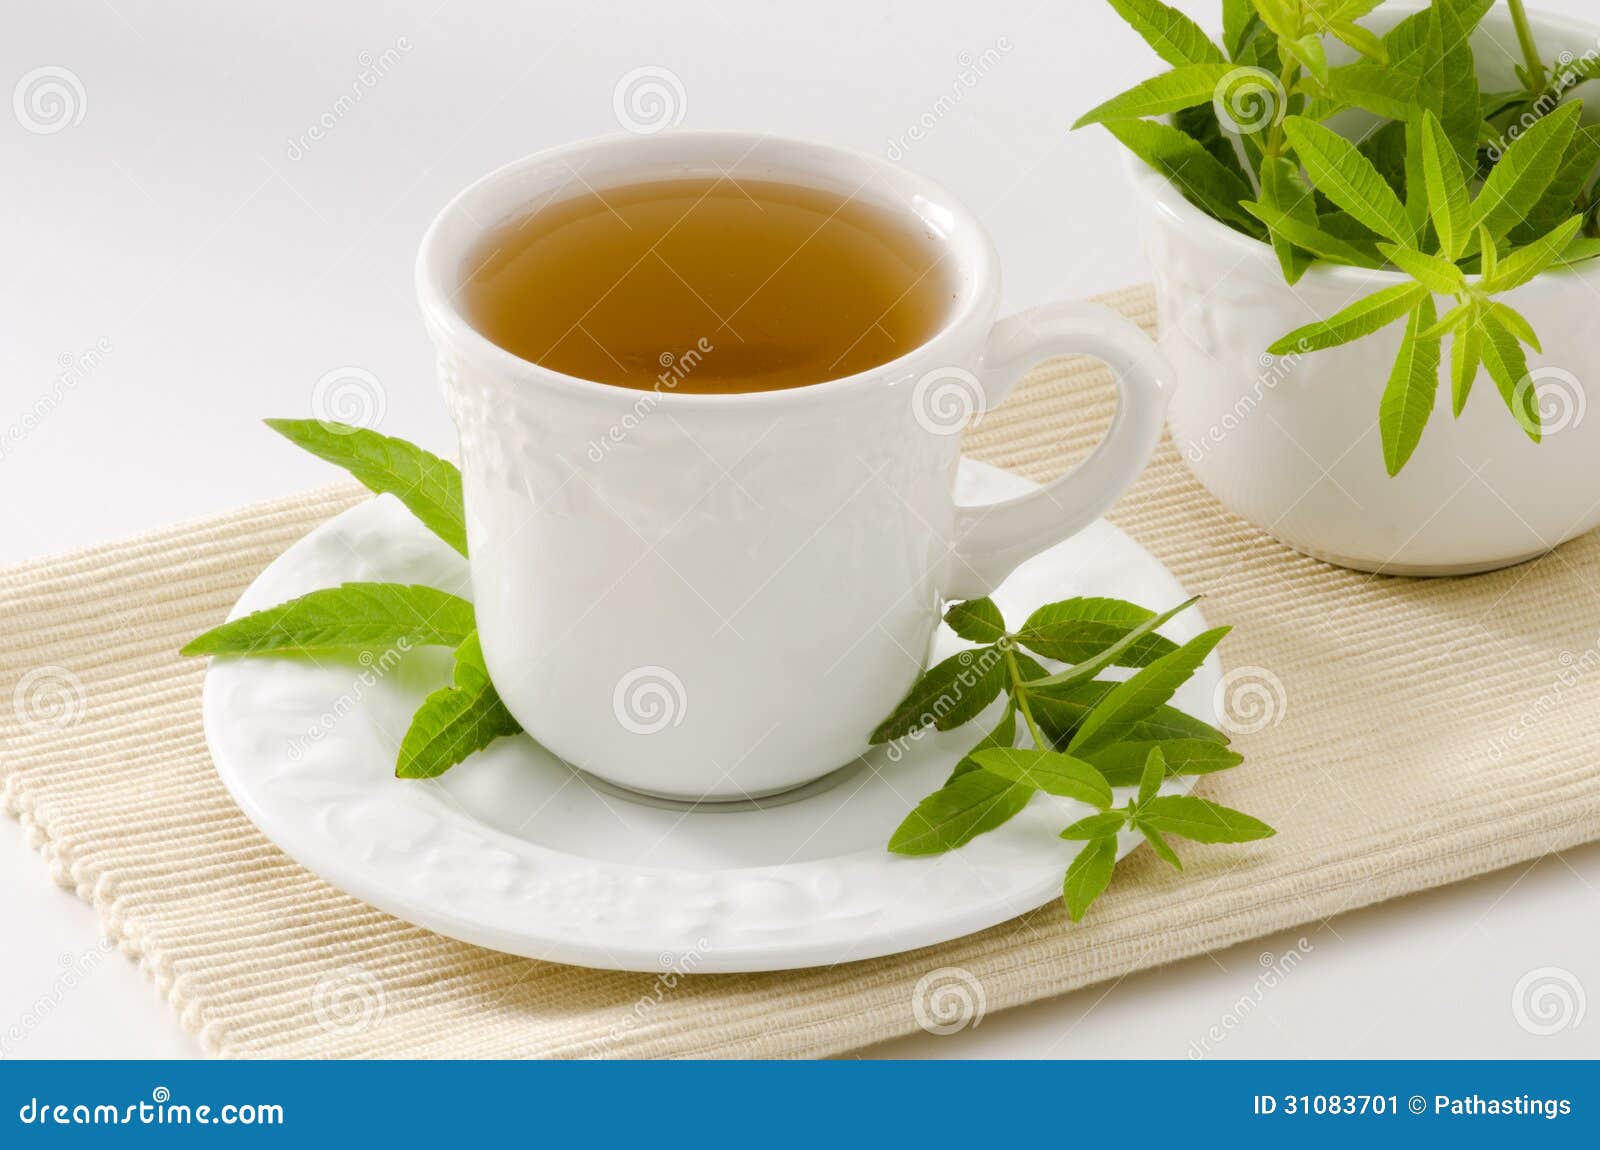 Lemon Verbena Herbal Tea In A Cup Aloysia Citriodora Naturopathy